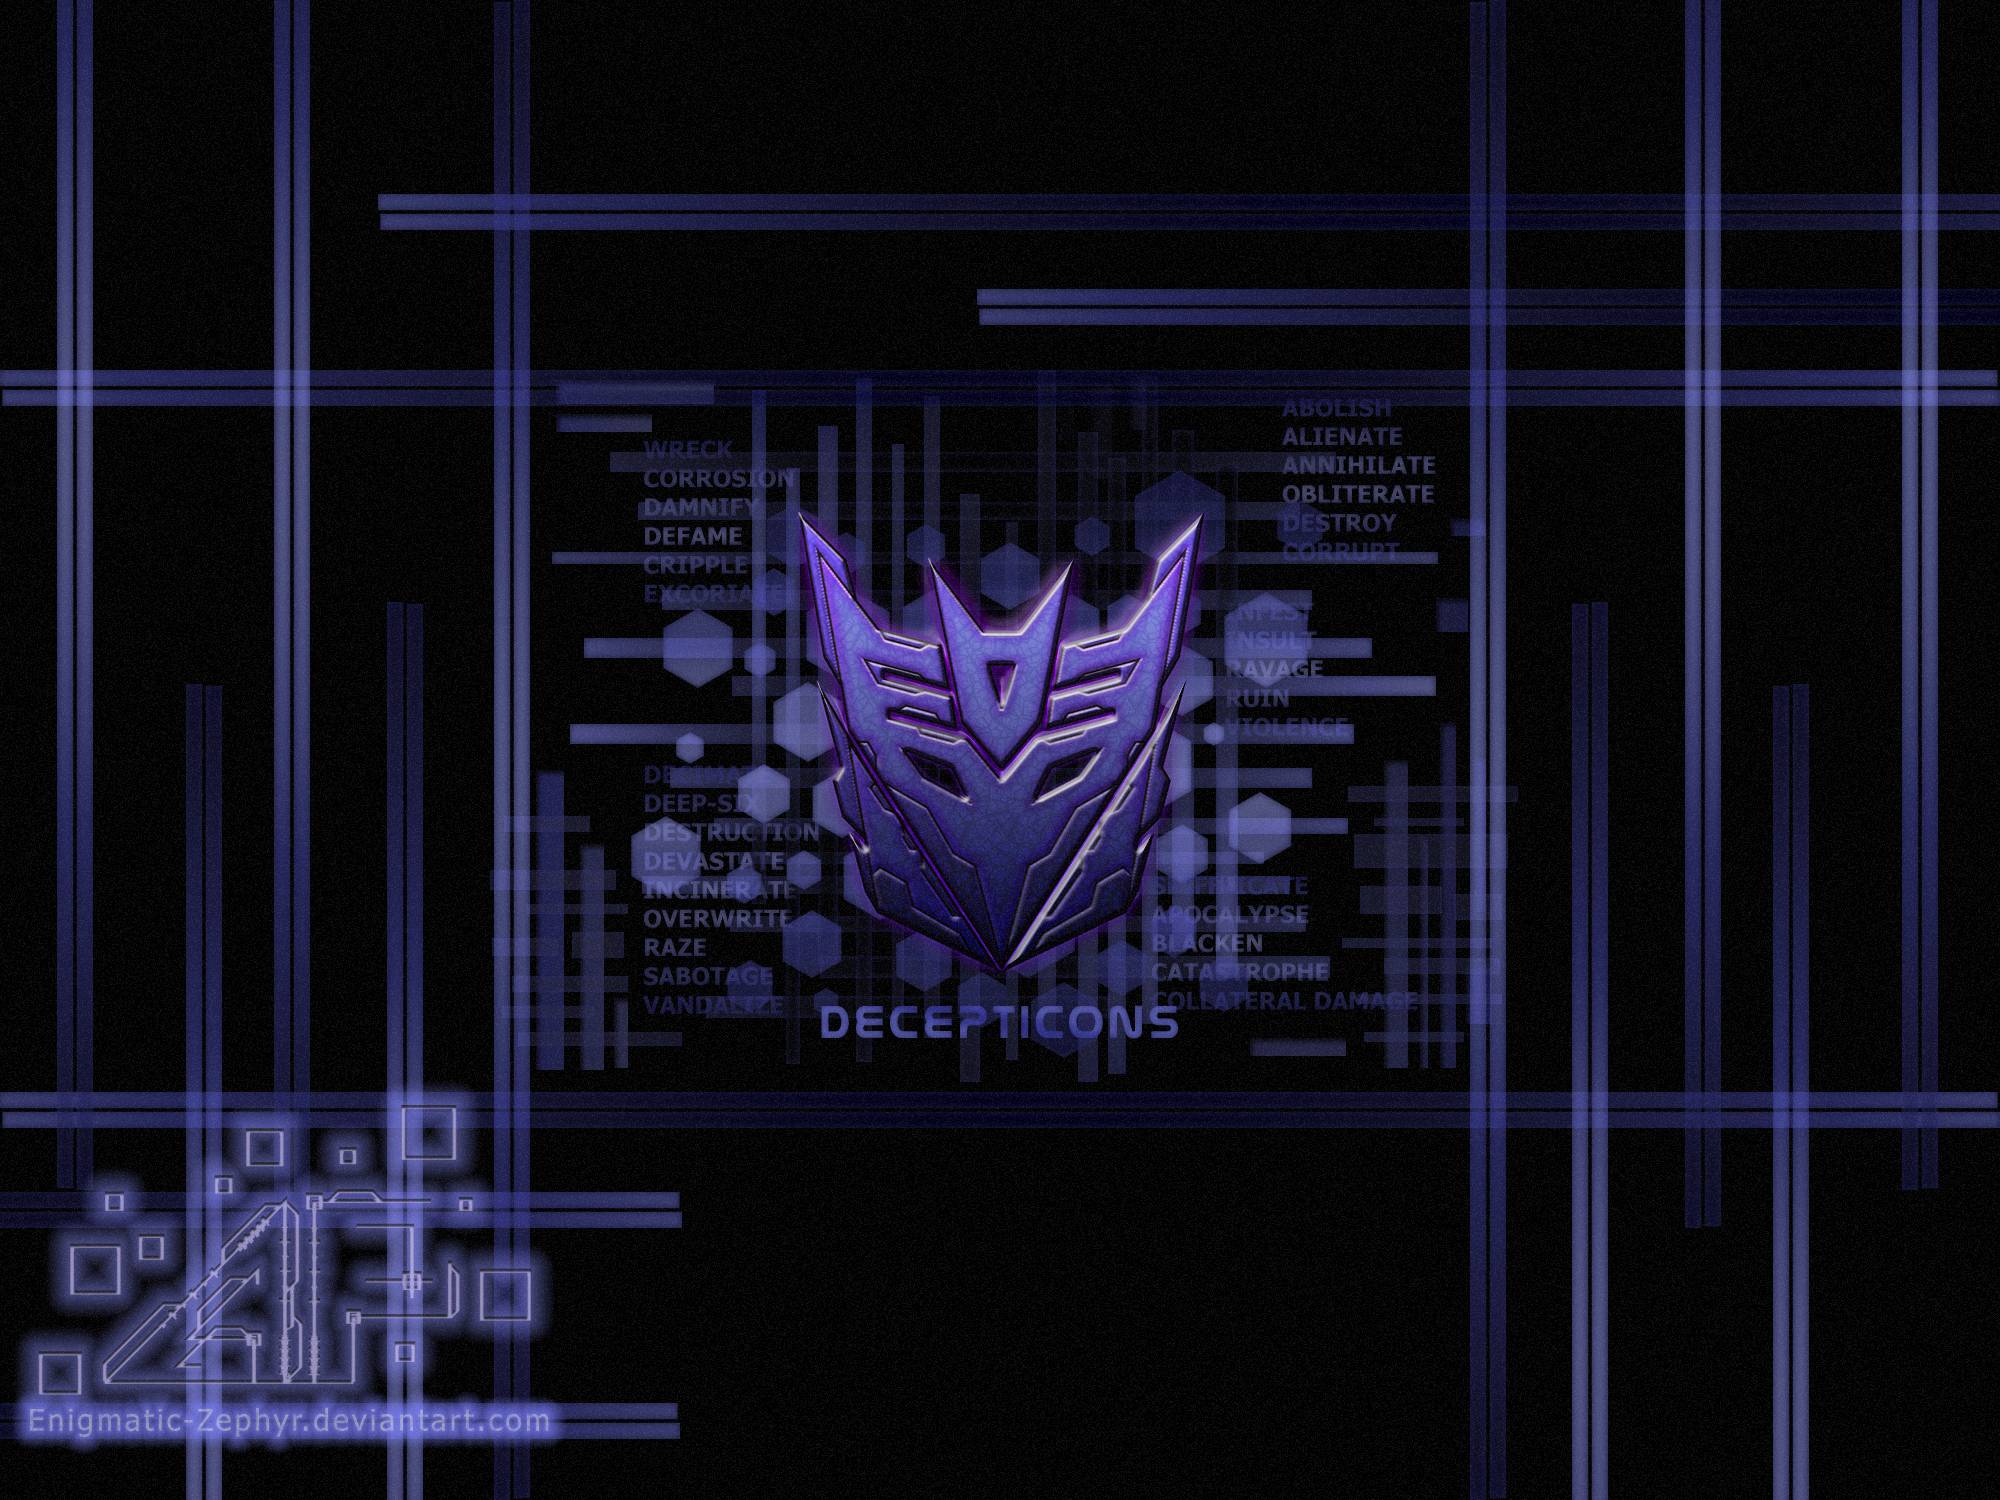 decepticons logo on purple